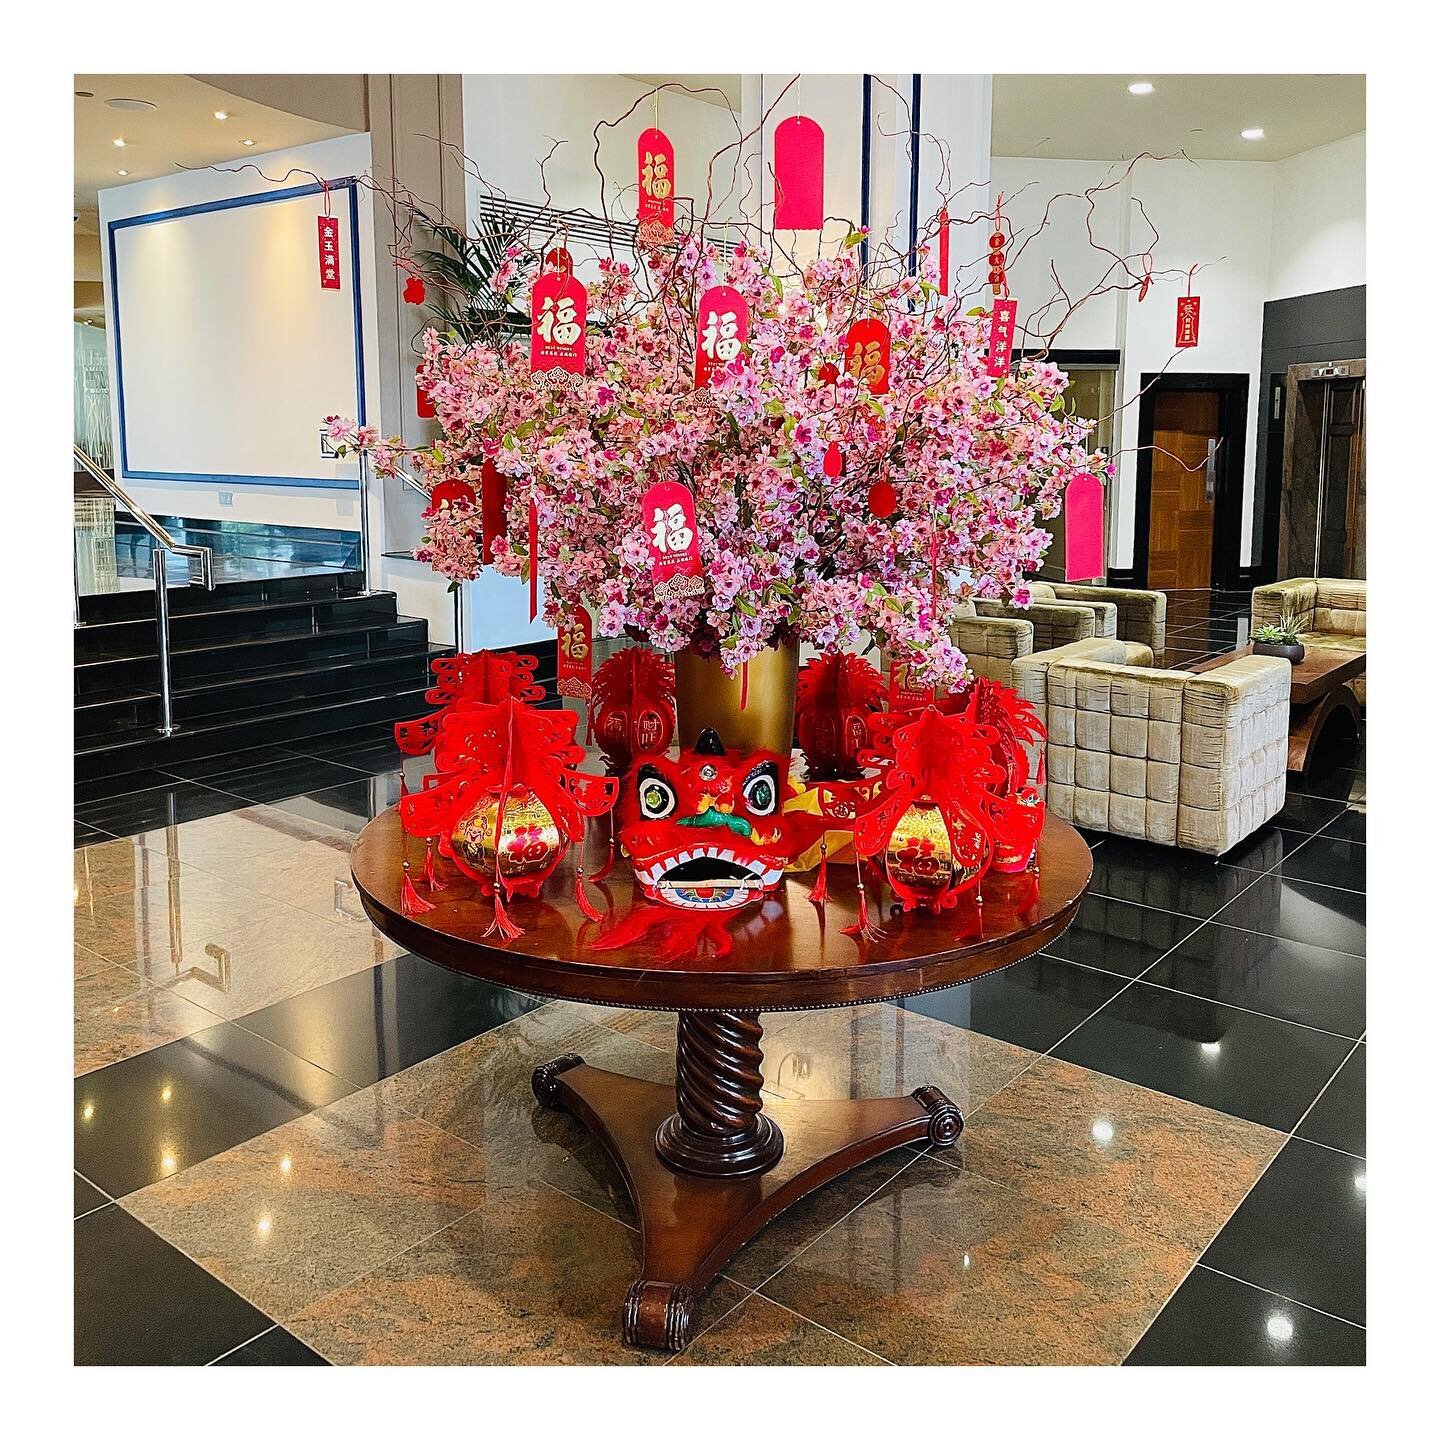 Chinese New Year hotel lobby flower design 🧧

#chinesenewyear #chinesenewyear2023 #cny #yearofrabbit #chinesenewyearflowers #hotelflorist #hotelflowers #londonhotelflorist #hotellobby #hotellobbyflowers #lobbyflowers #fivestarhotel #florist #londonf